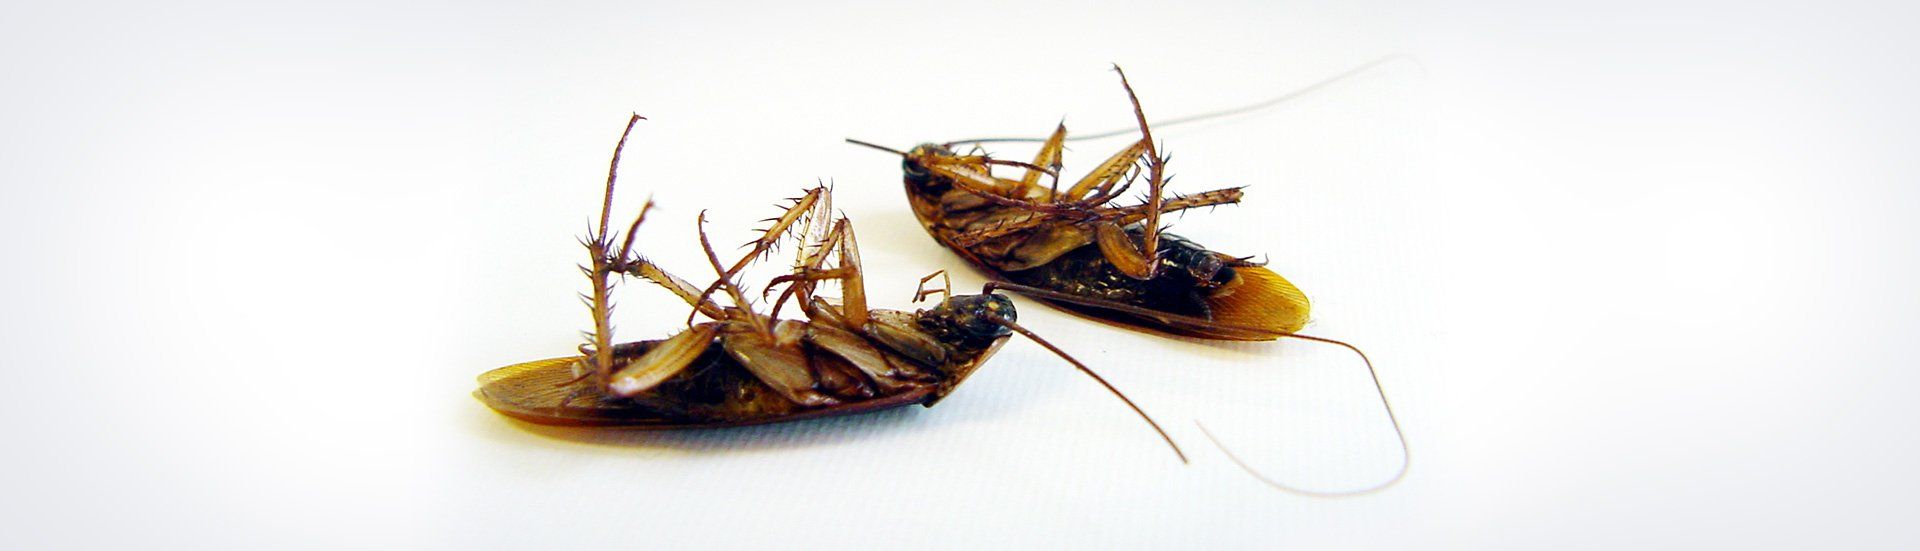 Roaches